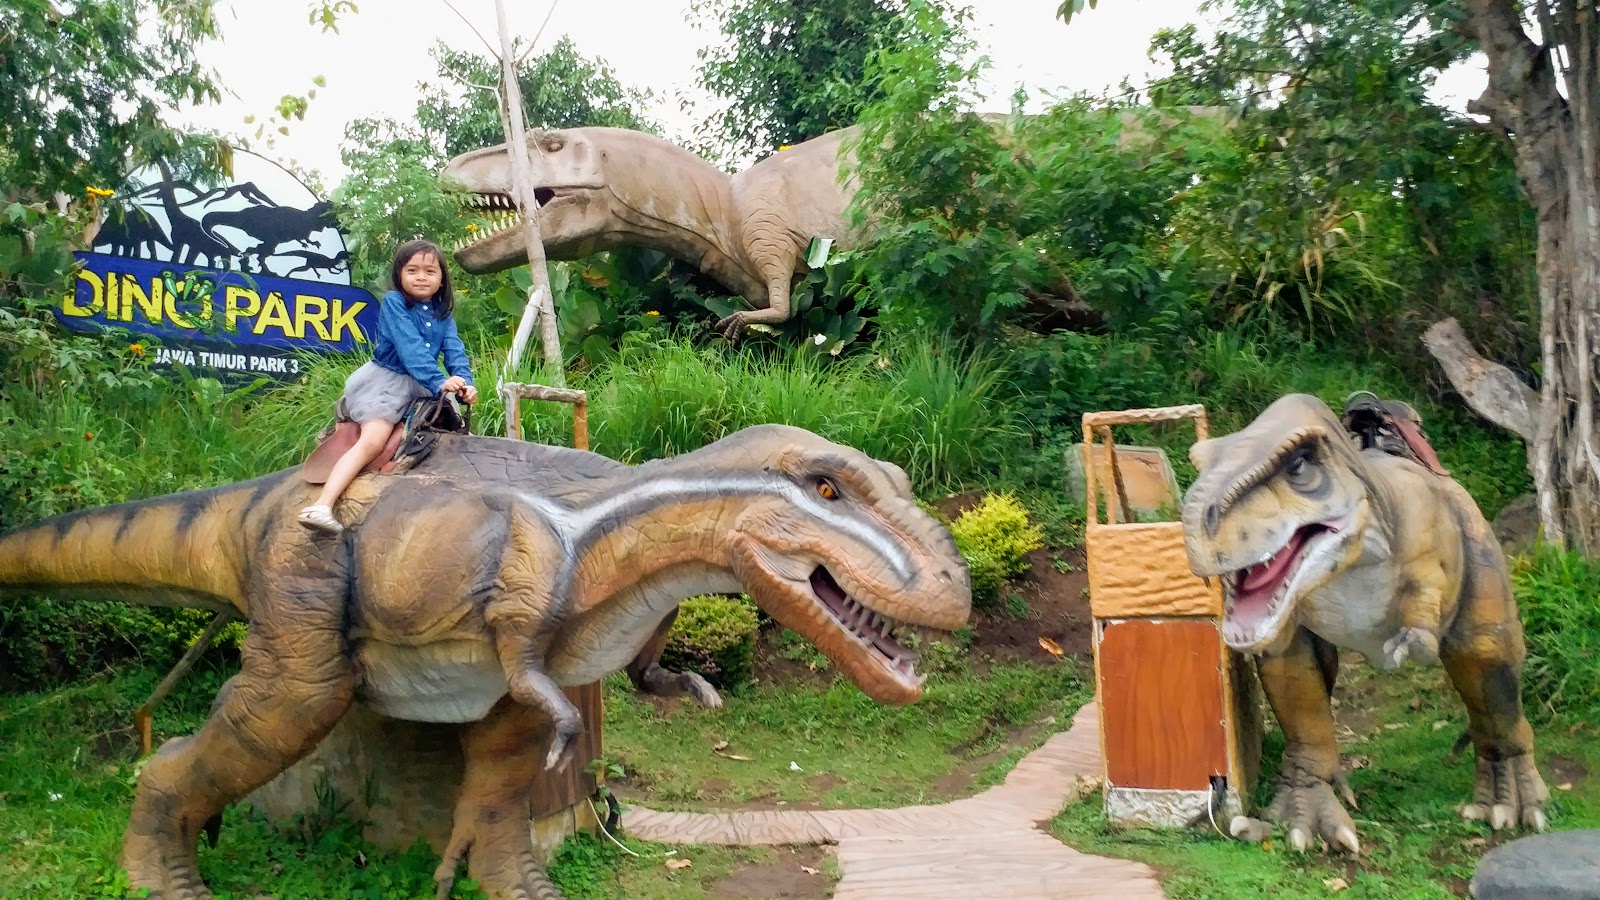 Review Lengkap Dino Park Jatim Park 3 Harga Tiket Wahana